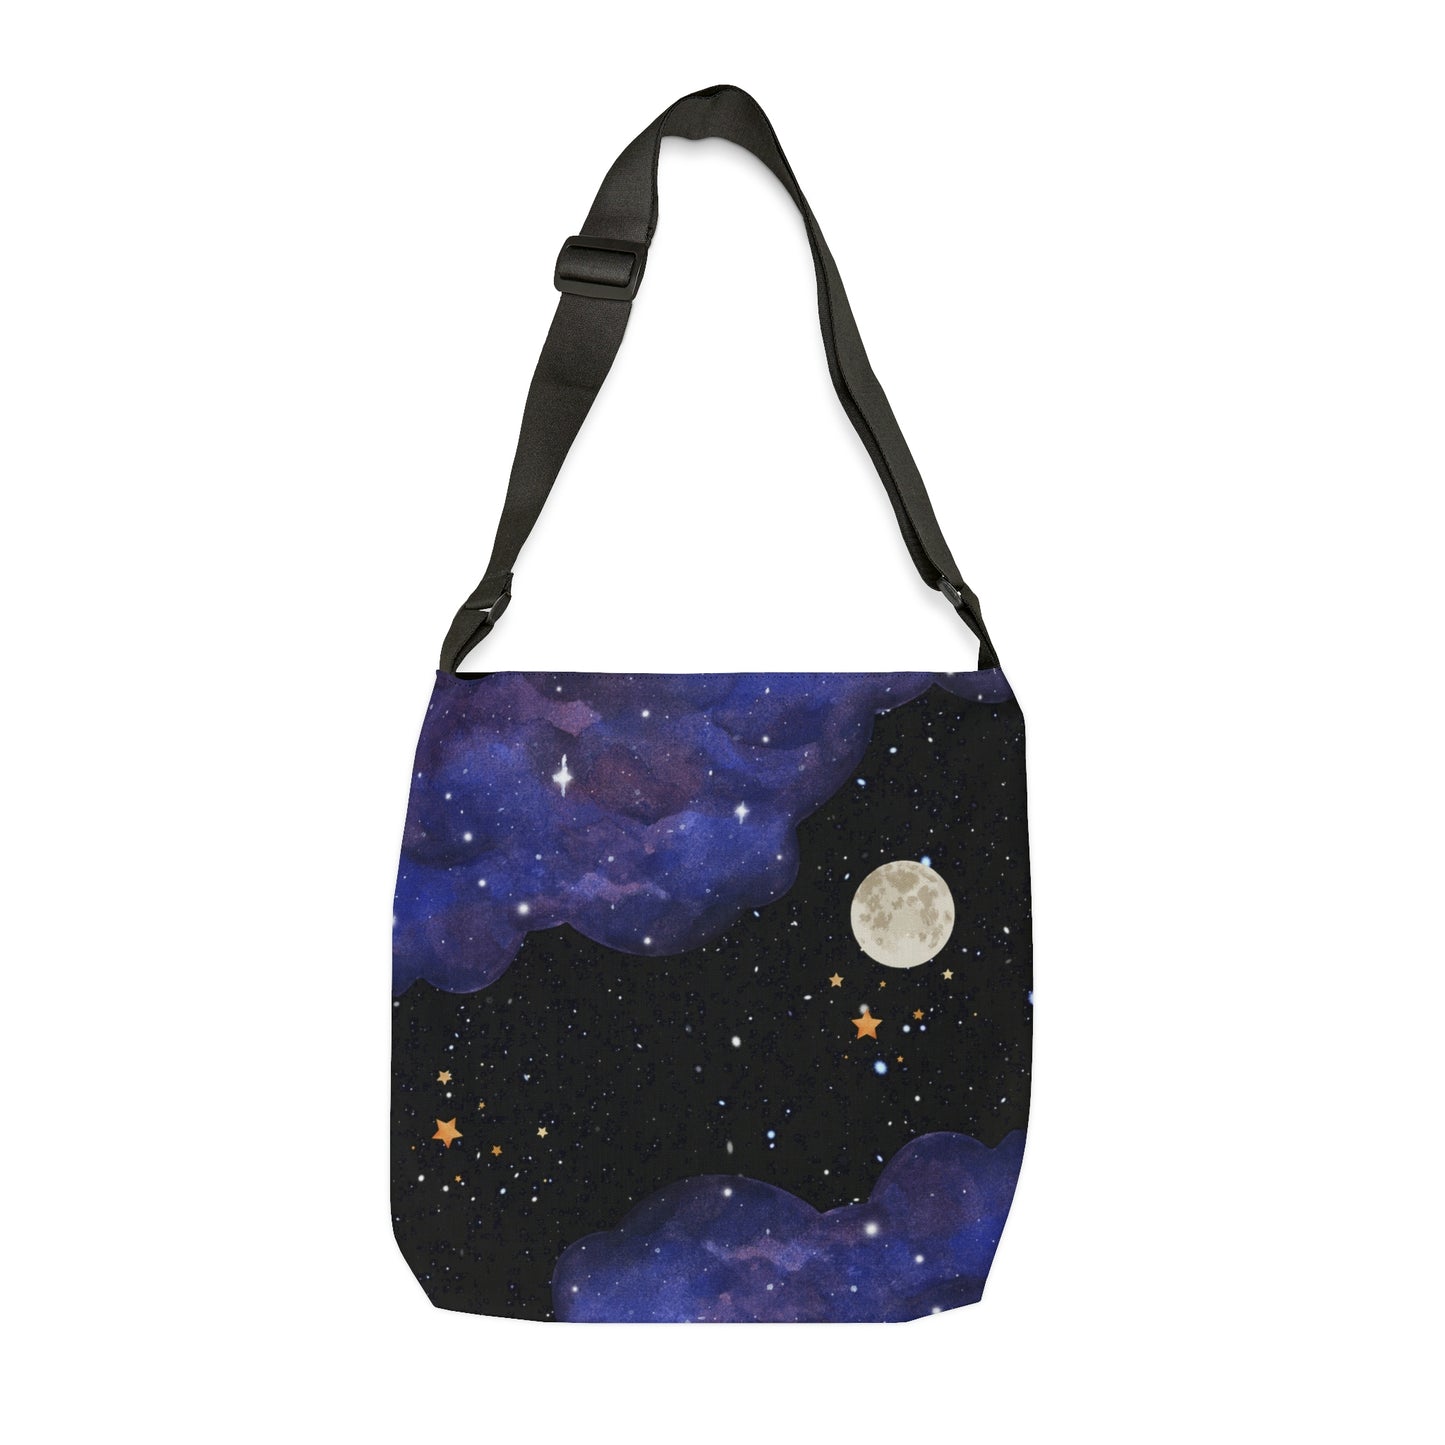 Luna Galaxy Messenger Bag